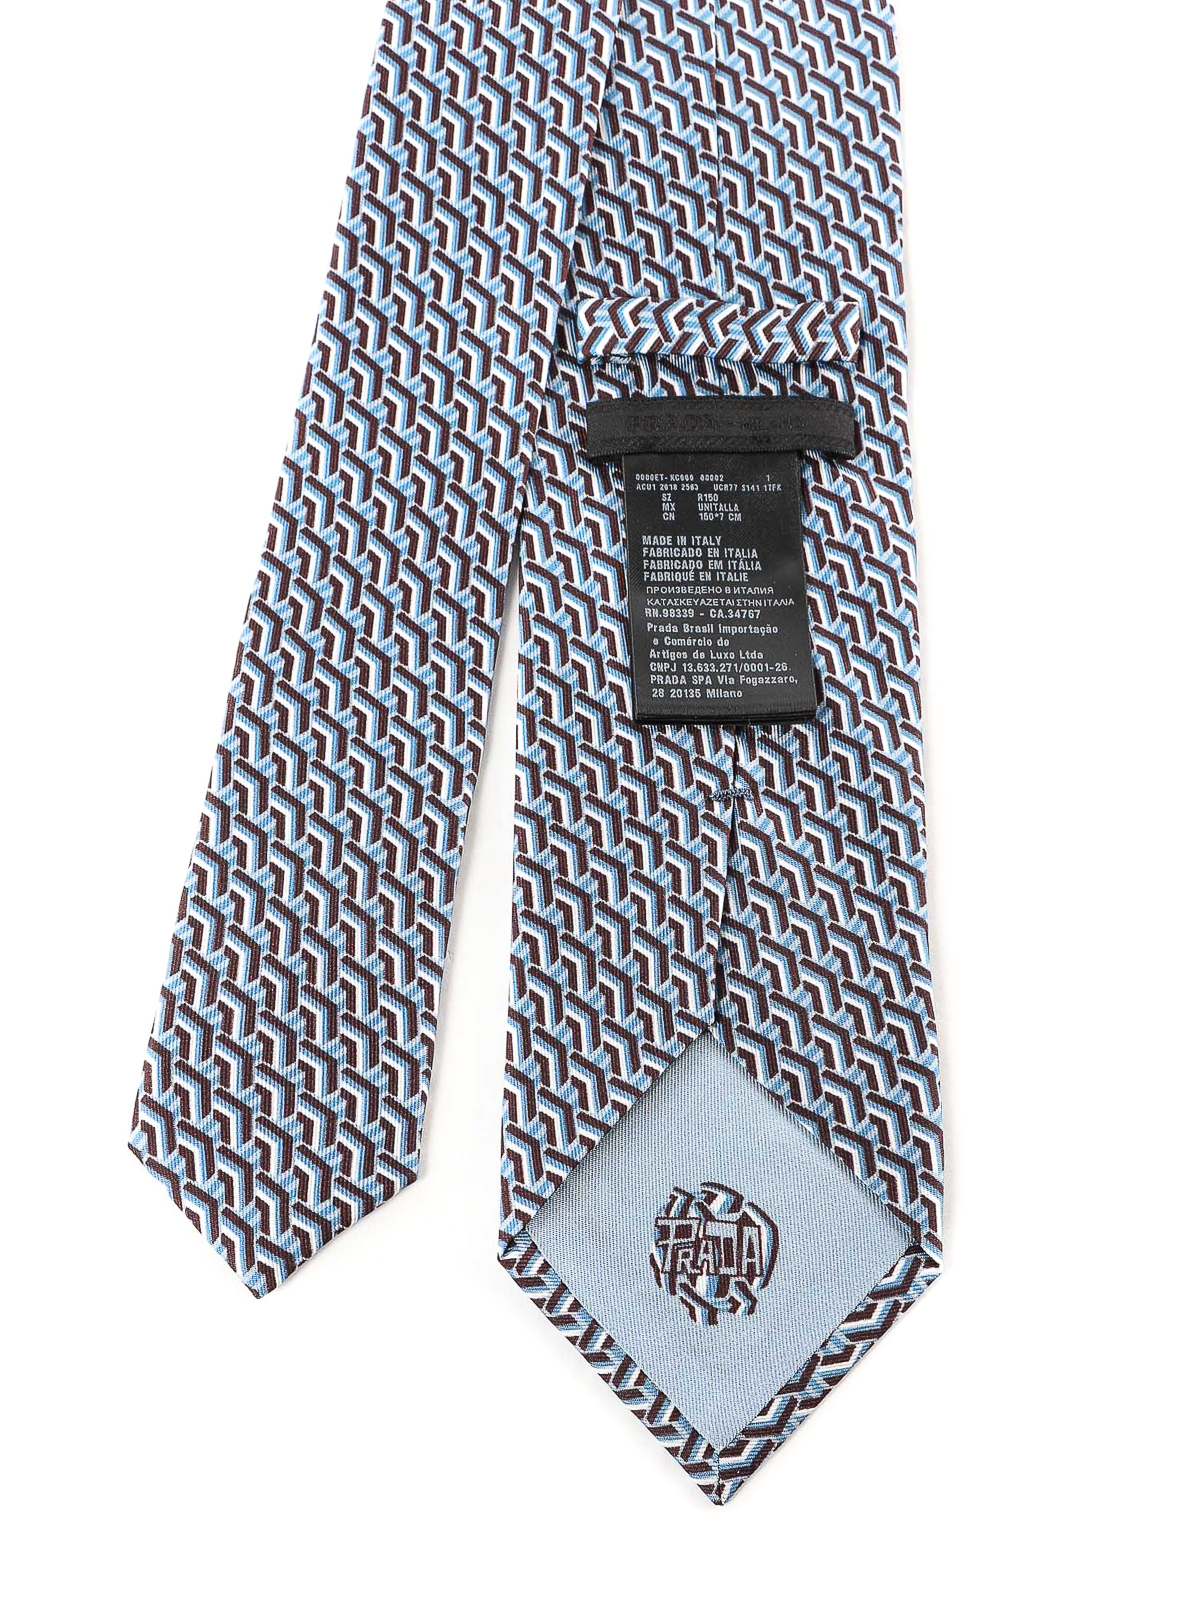 verraad ongezond namens Ties & bow ties Prada - Light blue geometric pattern silk tie - UCR771TFK237